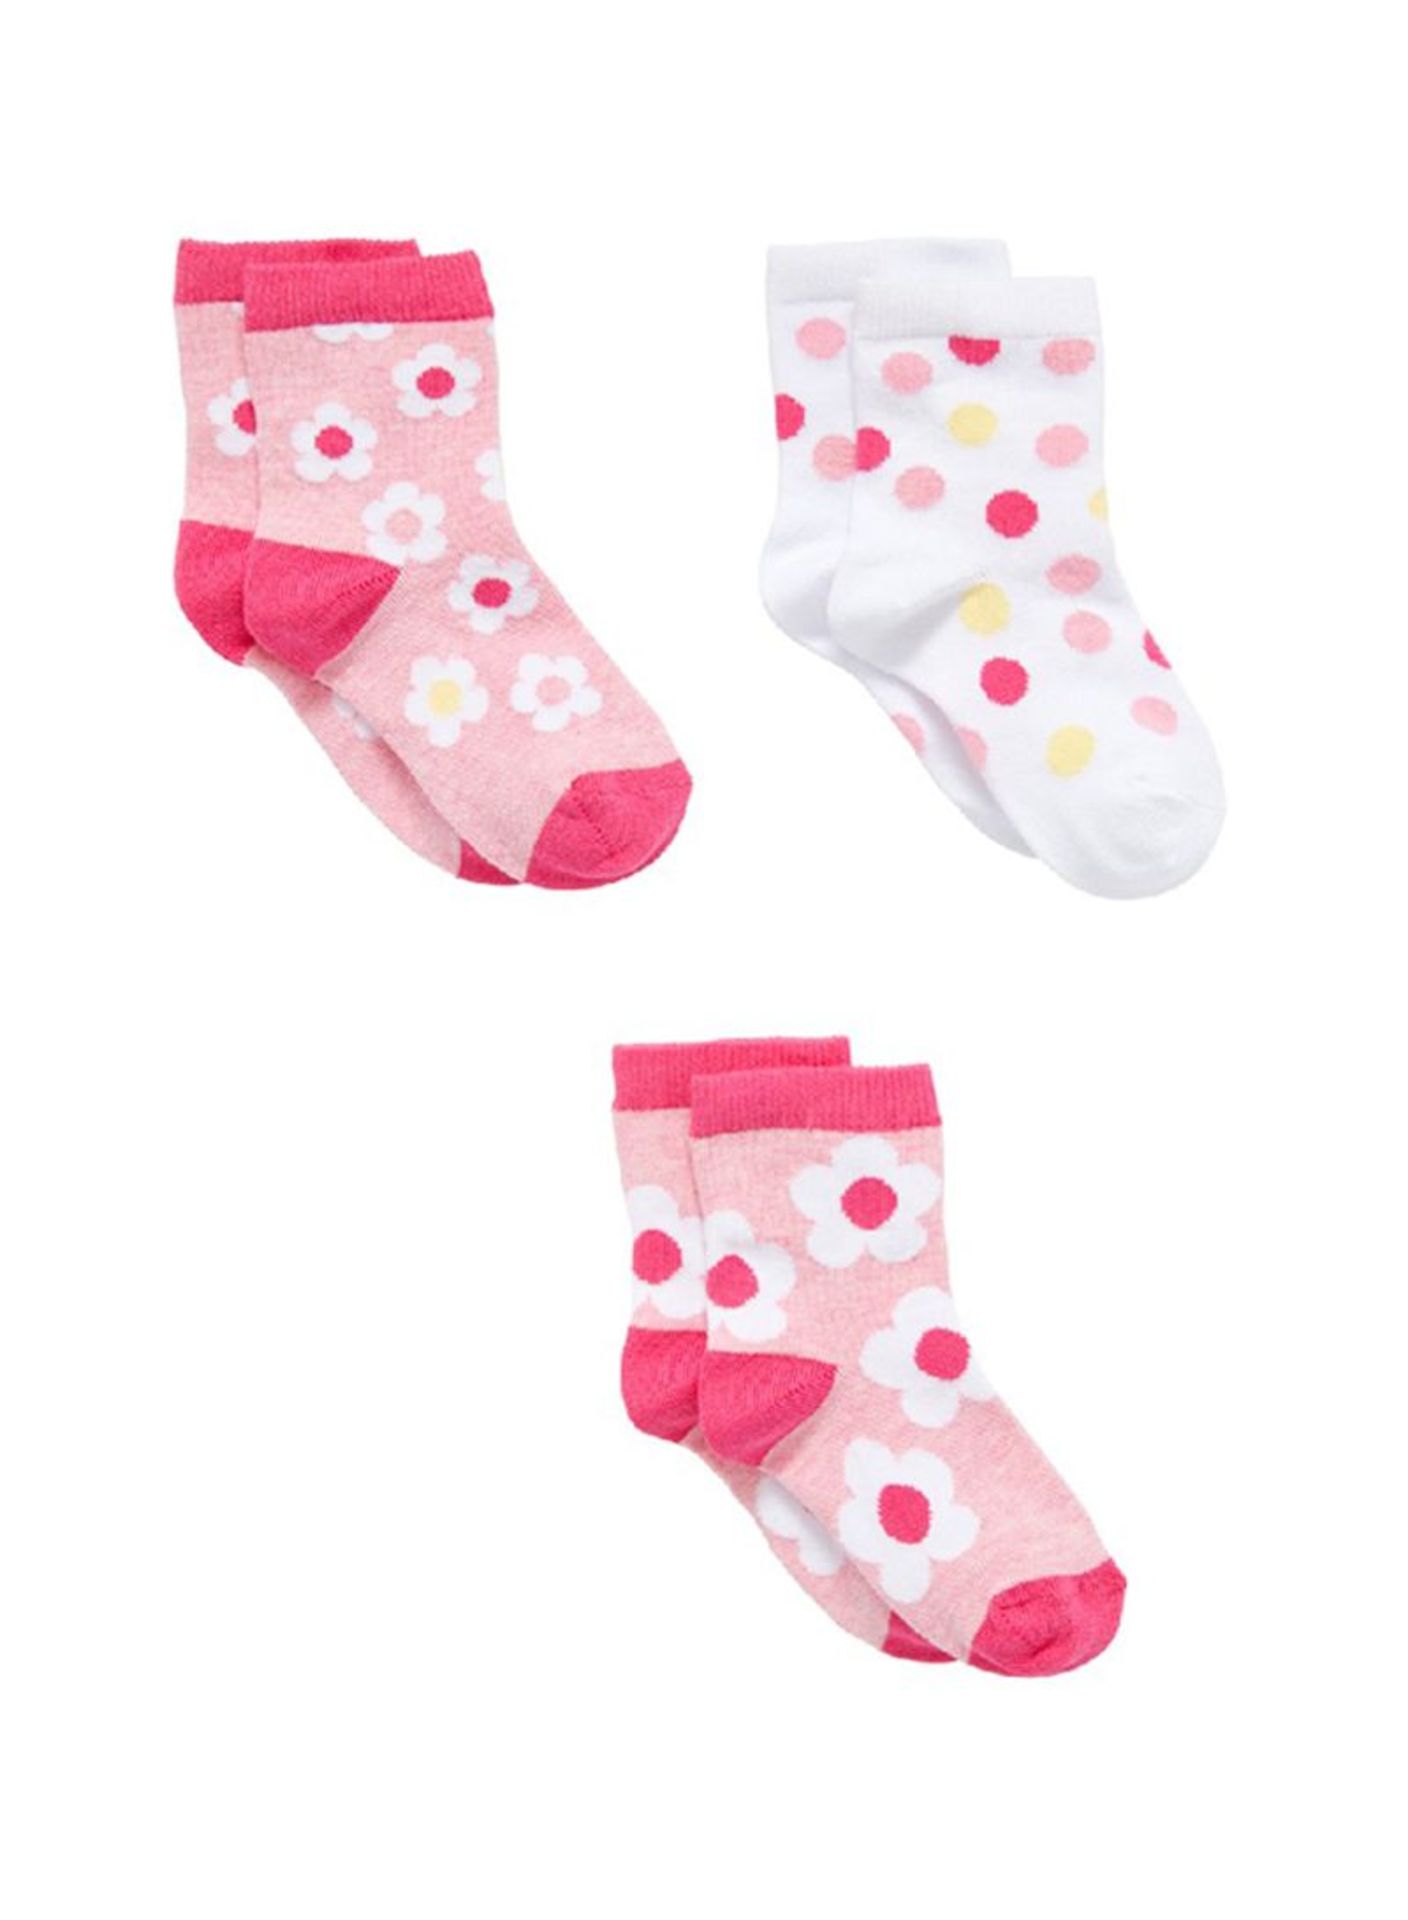 Bulk Mothercare Socks Joblot Rrp £1,828 - No Reserve - Image 8 of 11